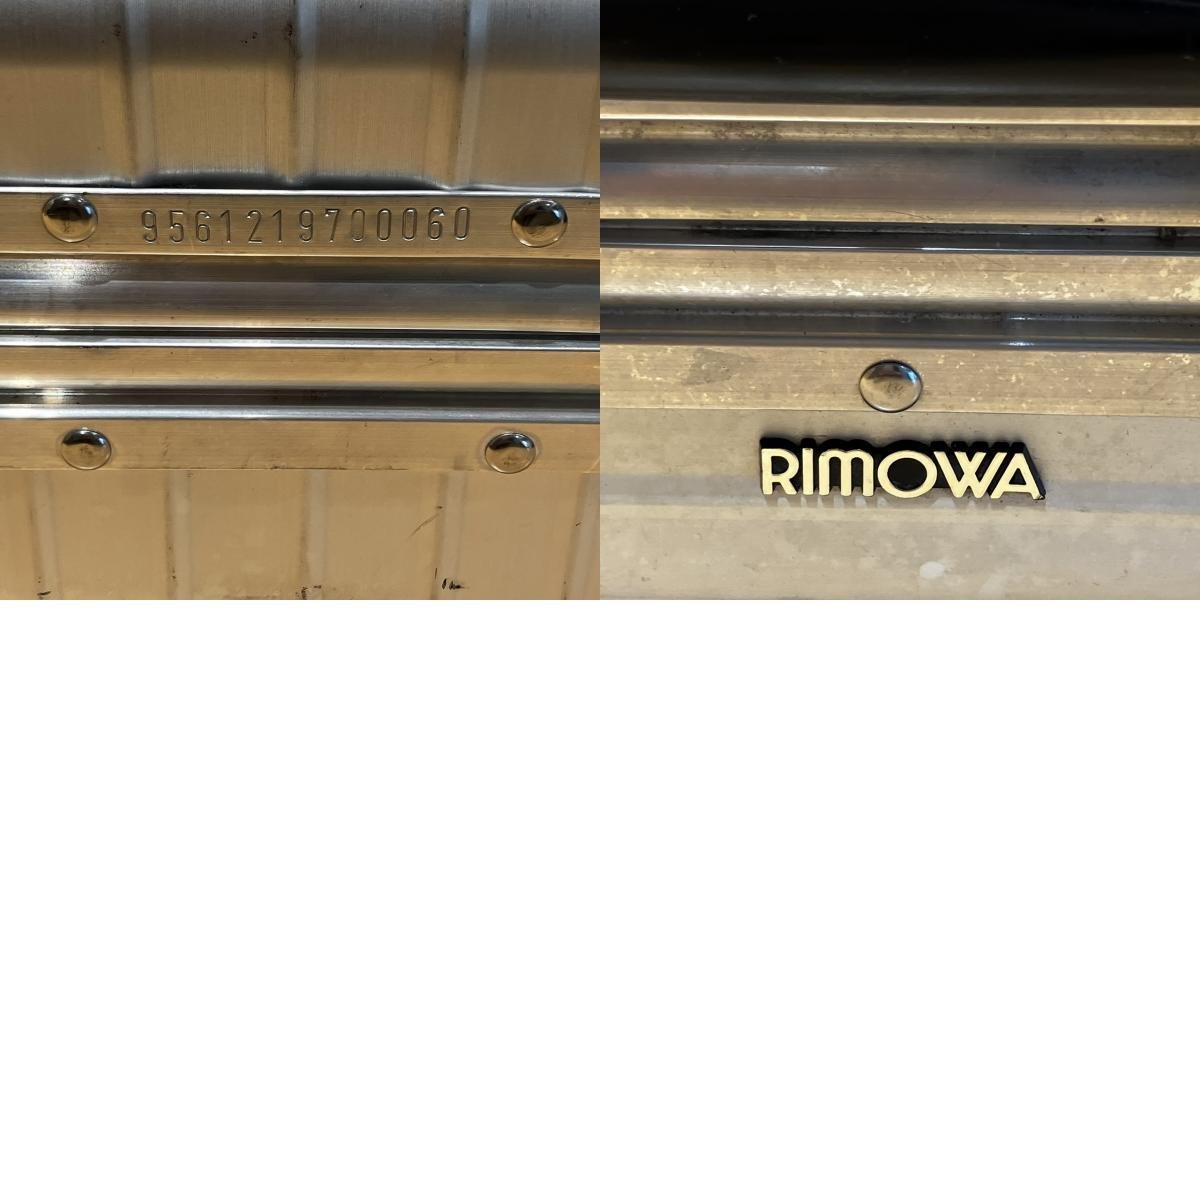 RIMOWA リモワ RIMOWA アタッシュケース 9561219700060 シルバーカラー 鍵付_画像10